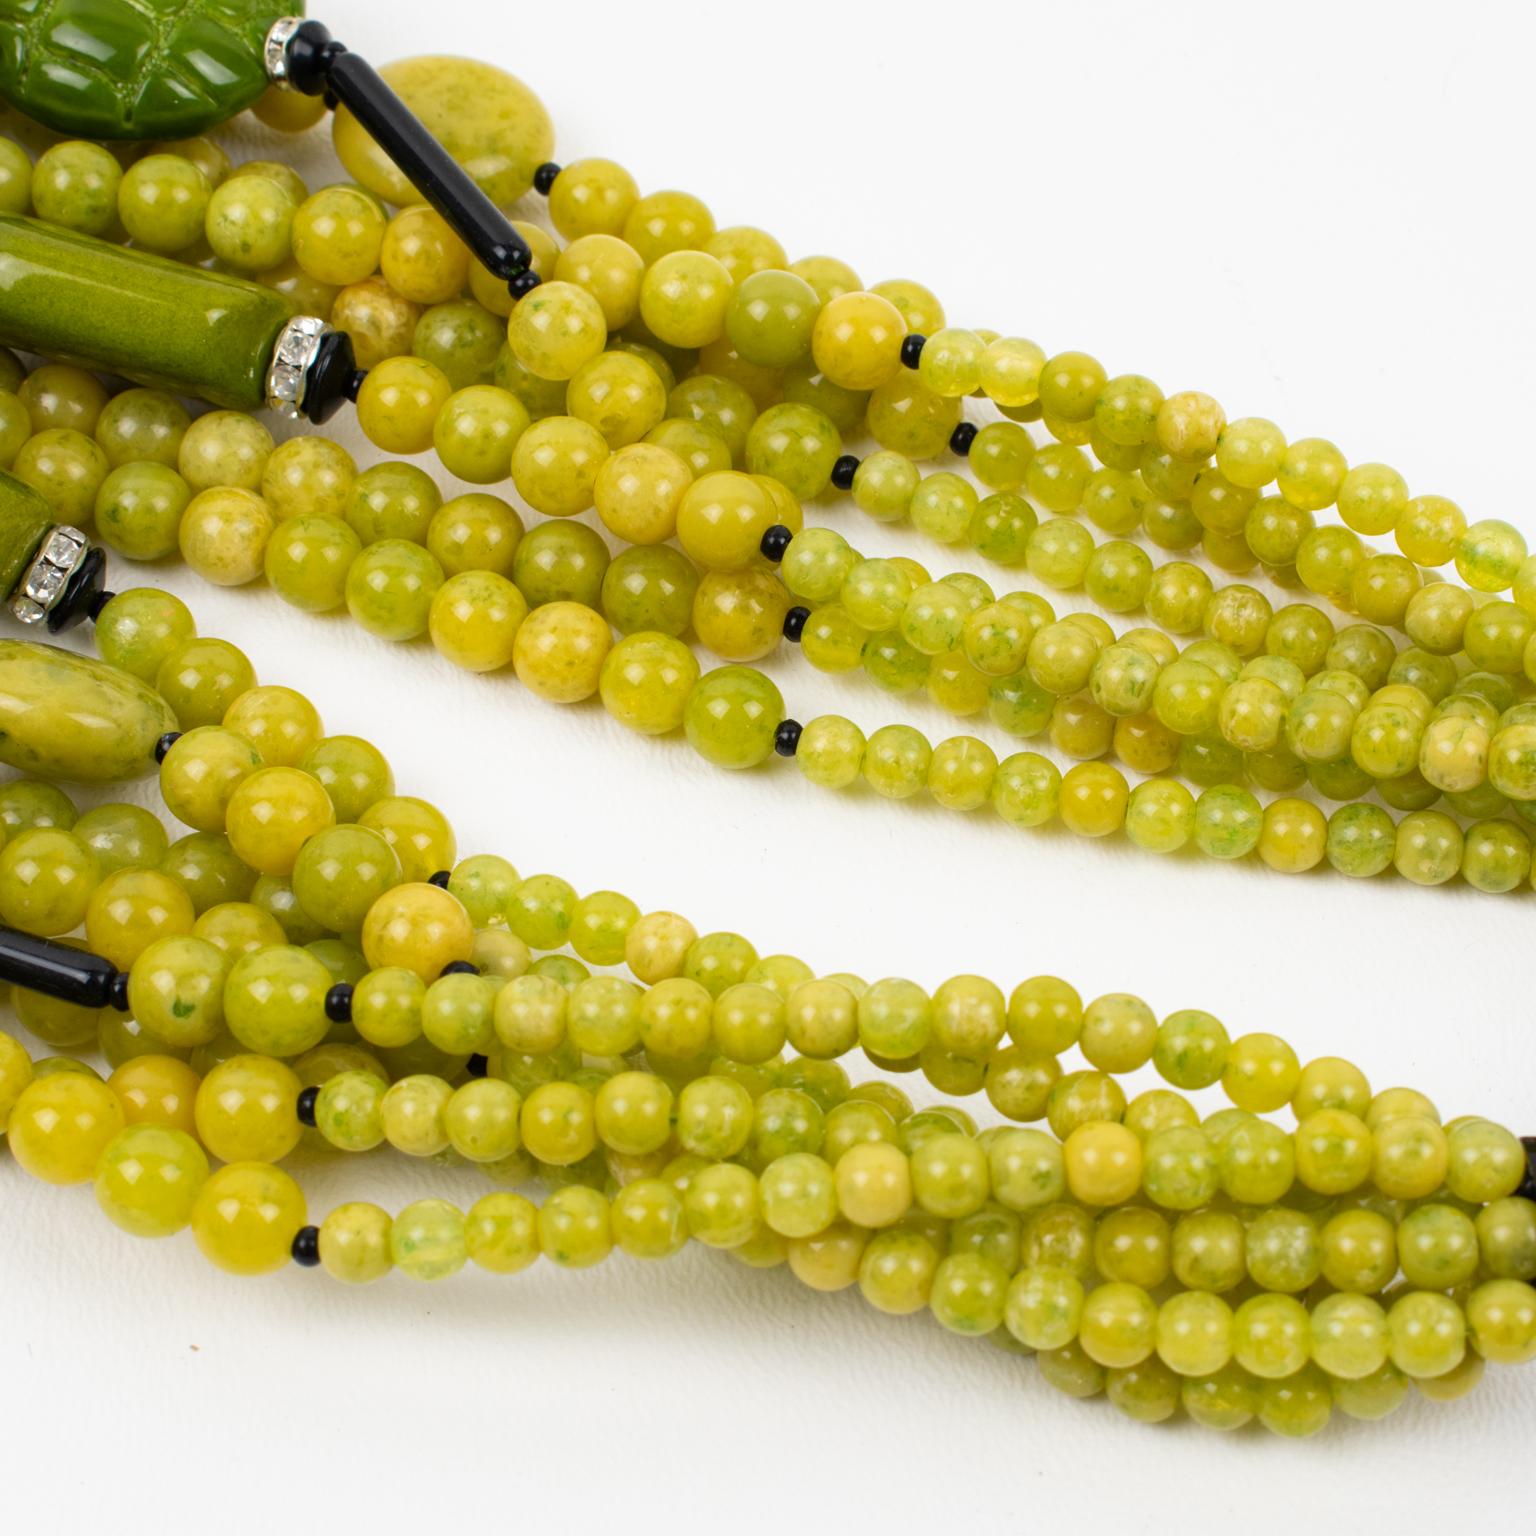 Modern Angela Caputi Resin Multi-Strand Choker Necklace Avocado Green and Faux Jade